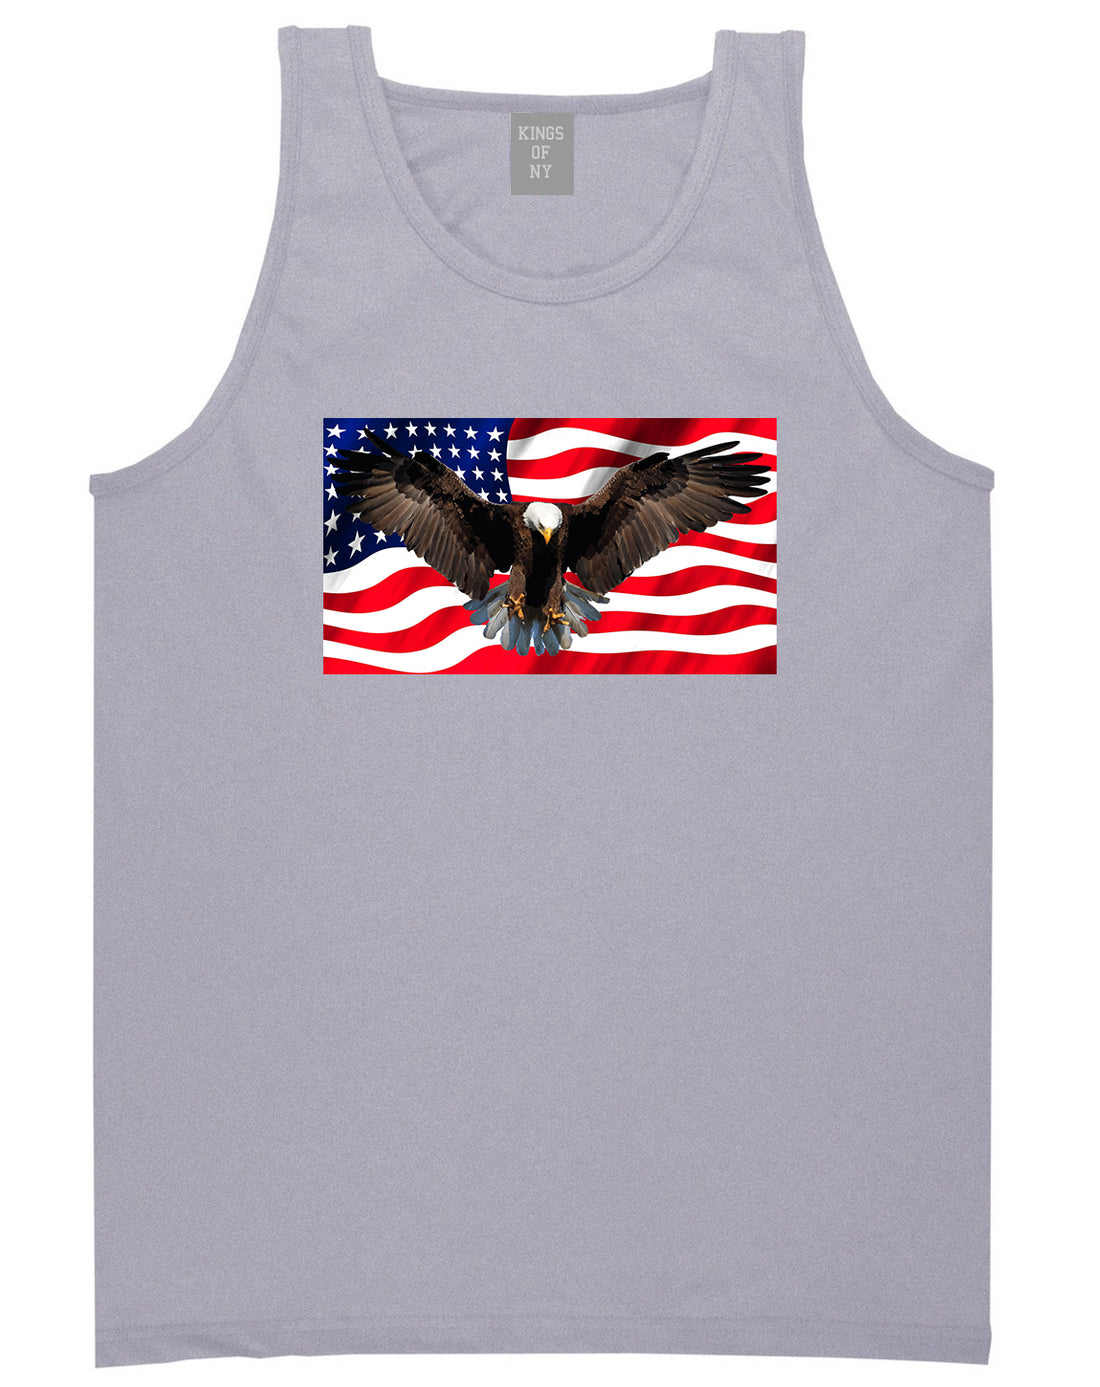 Bald Eagle American Flag Grey Tank Top Shirt by Kings Of NY